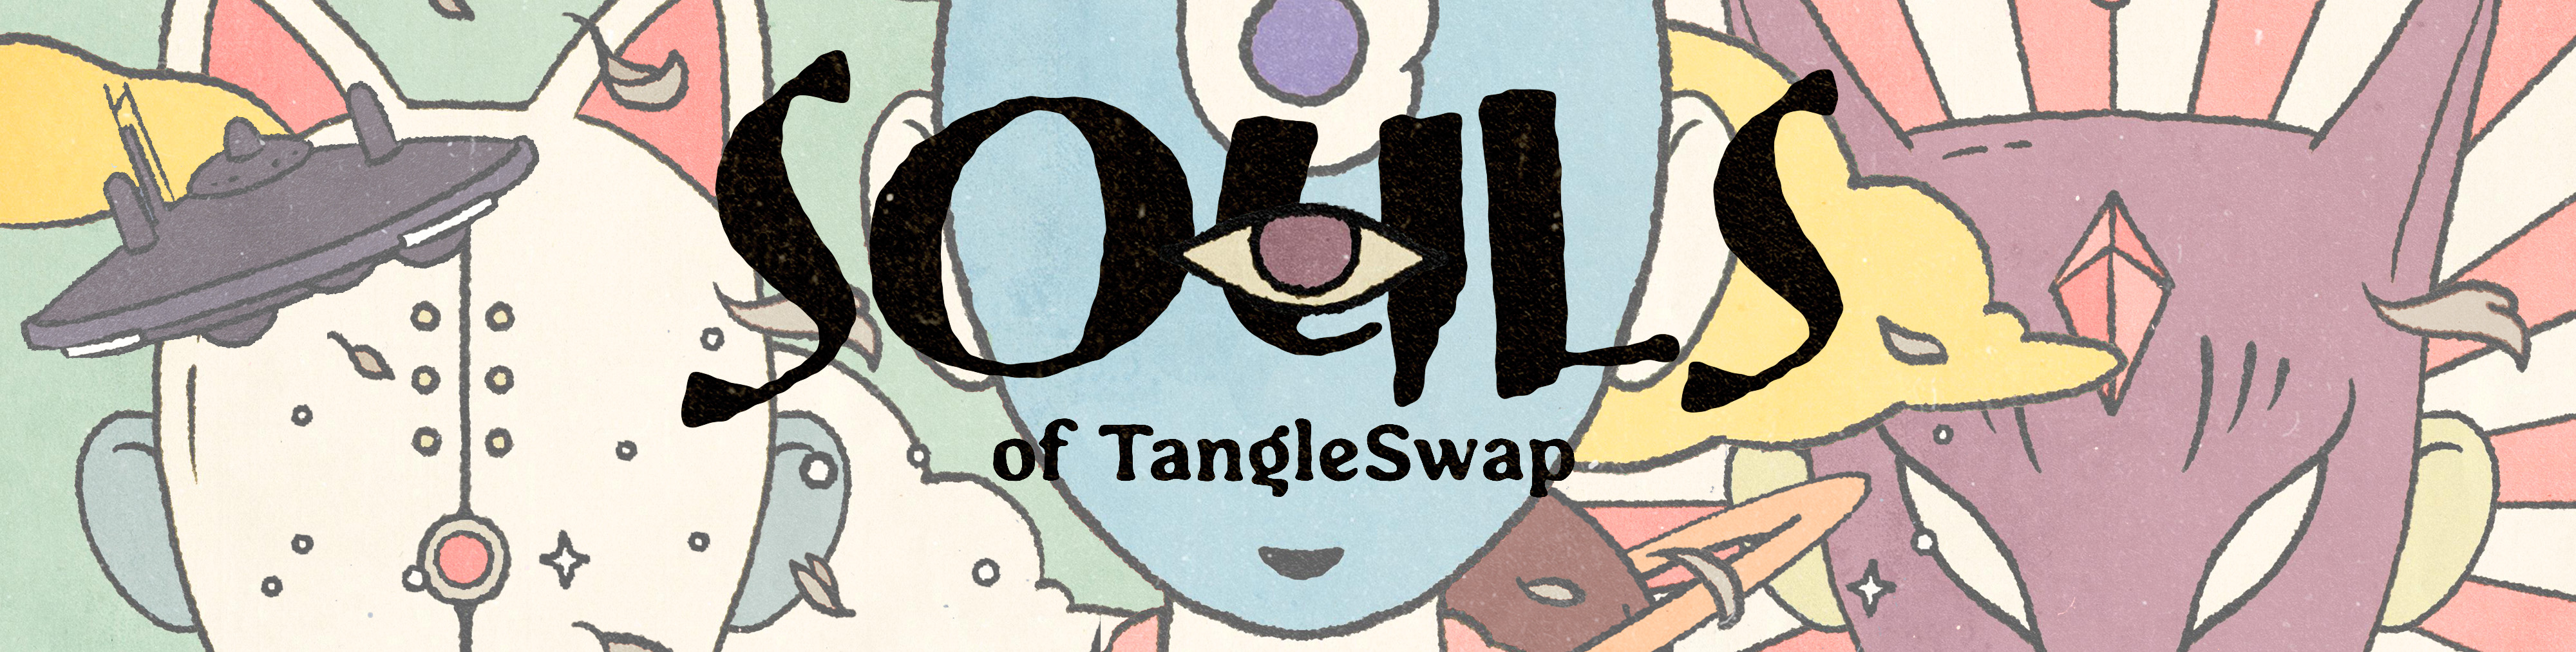 SOULS-of-TangleSwap